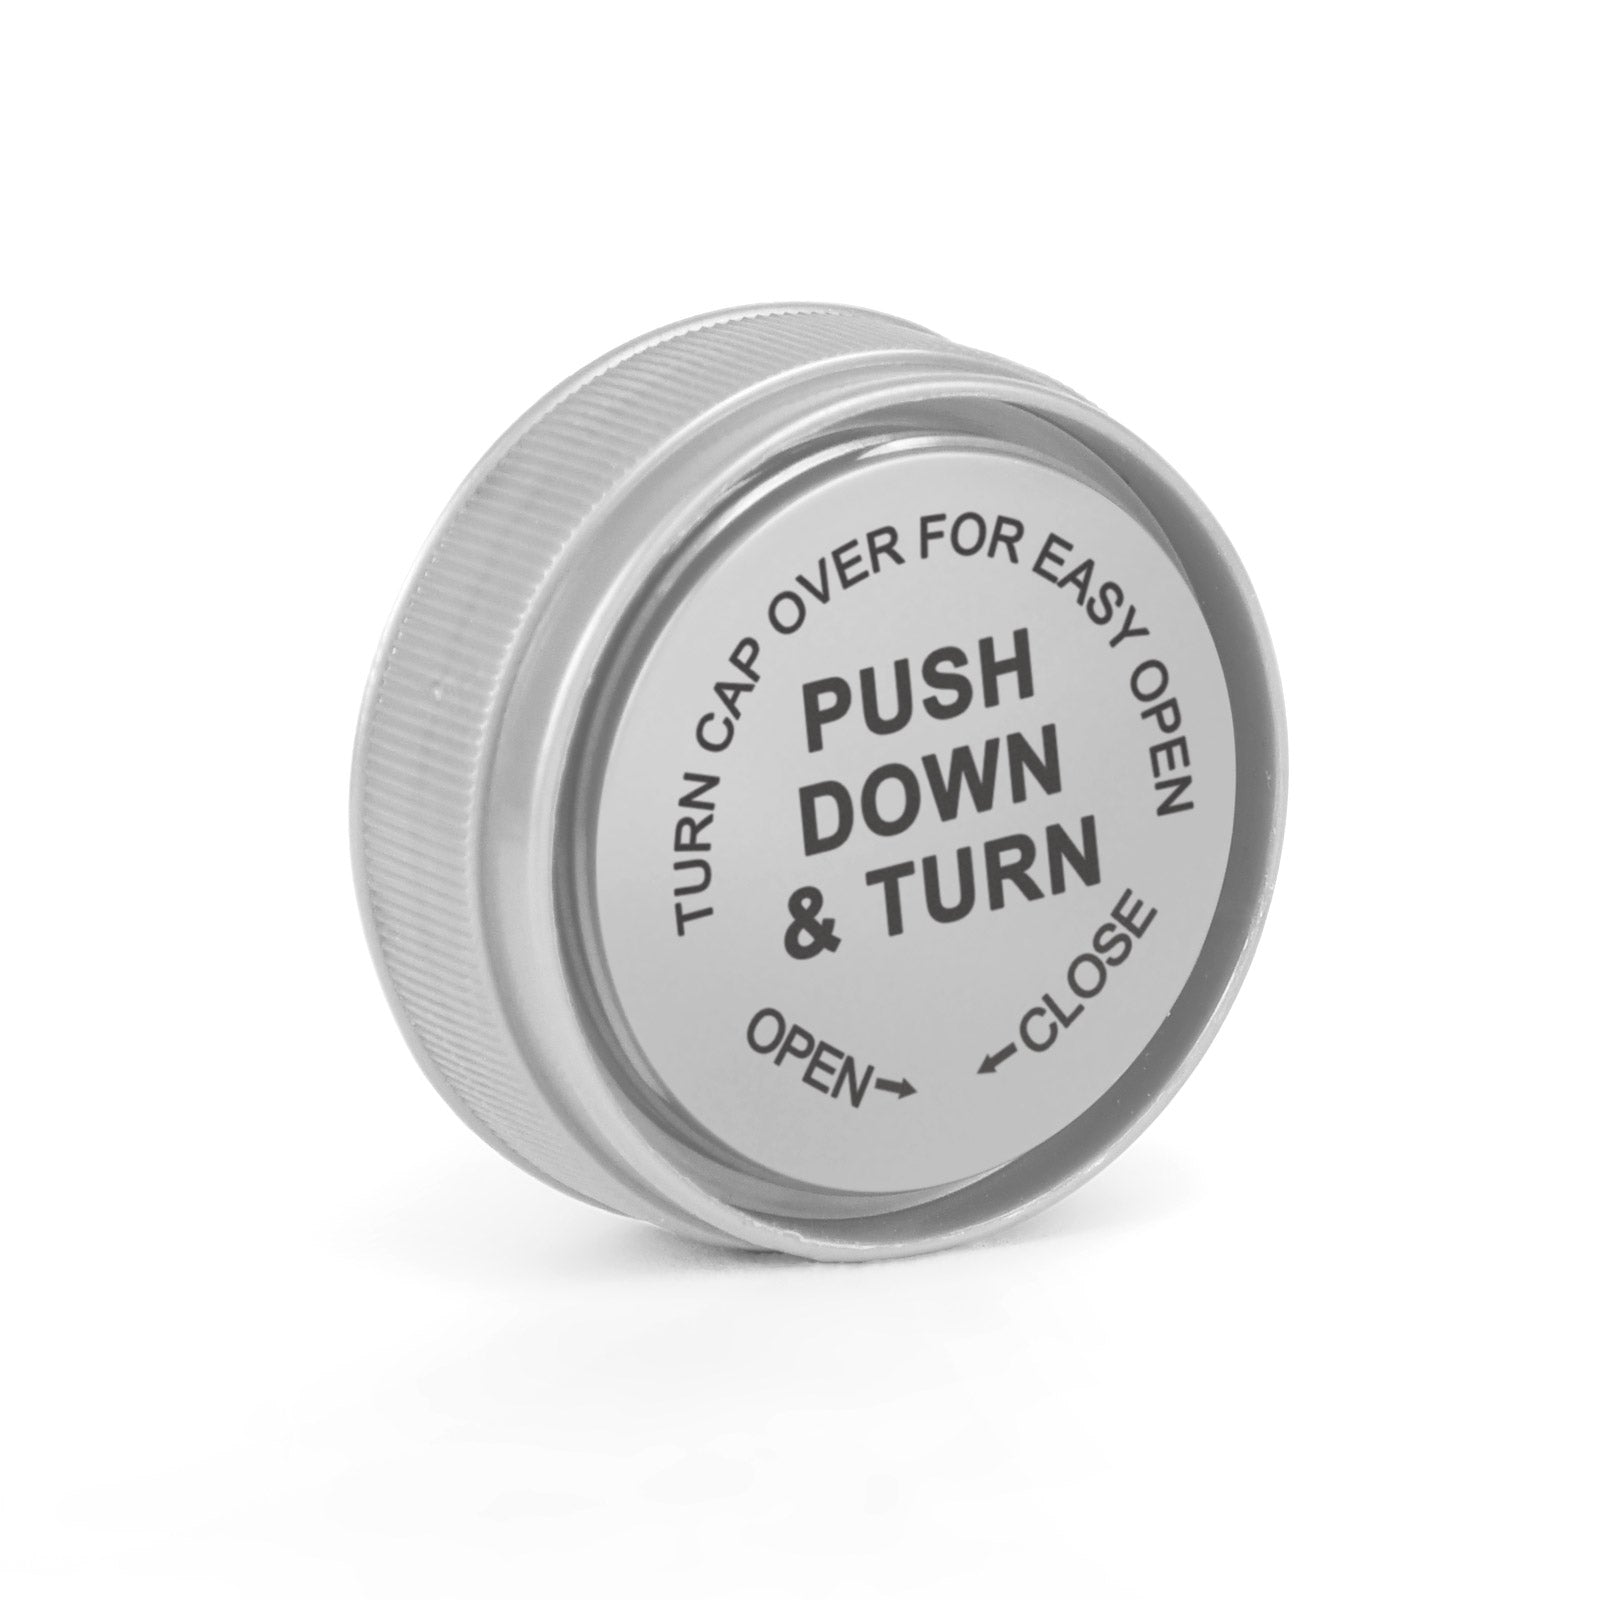 40 Dram Reversible Cap Opaque Silver - 1 Count